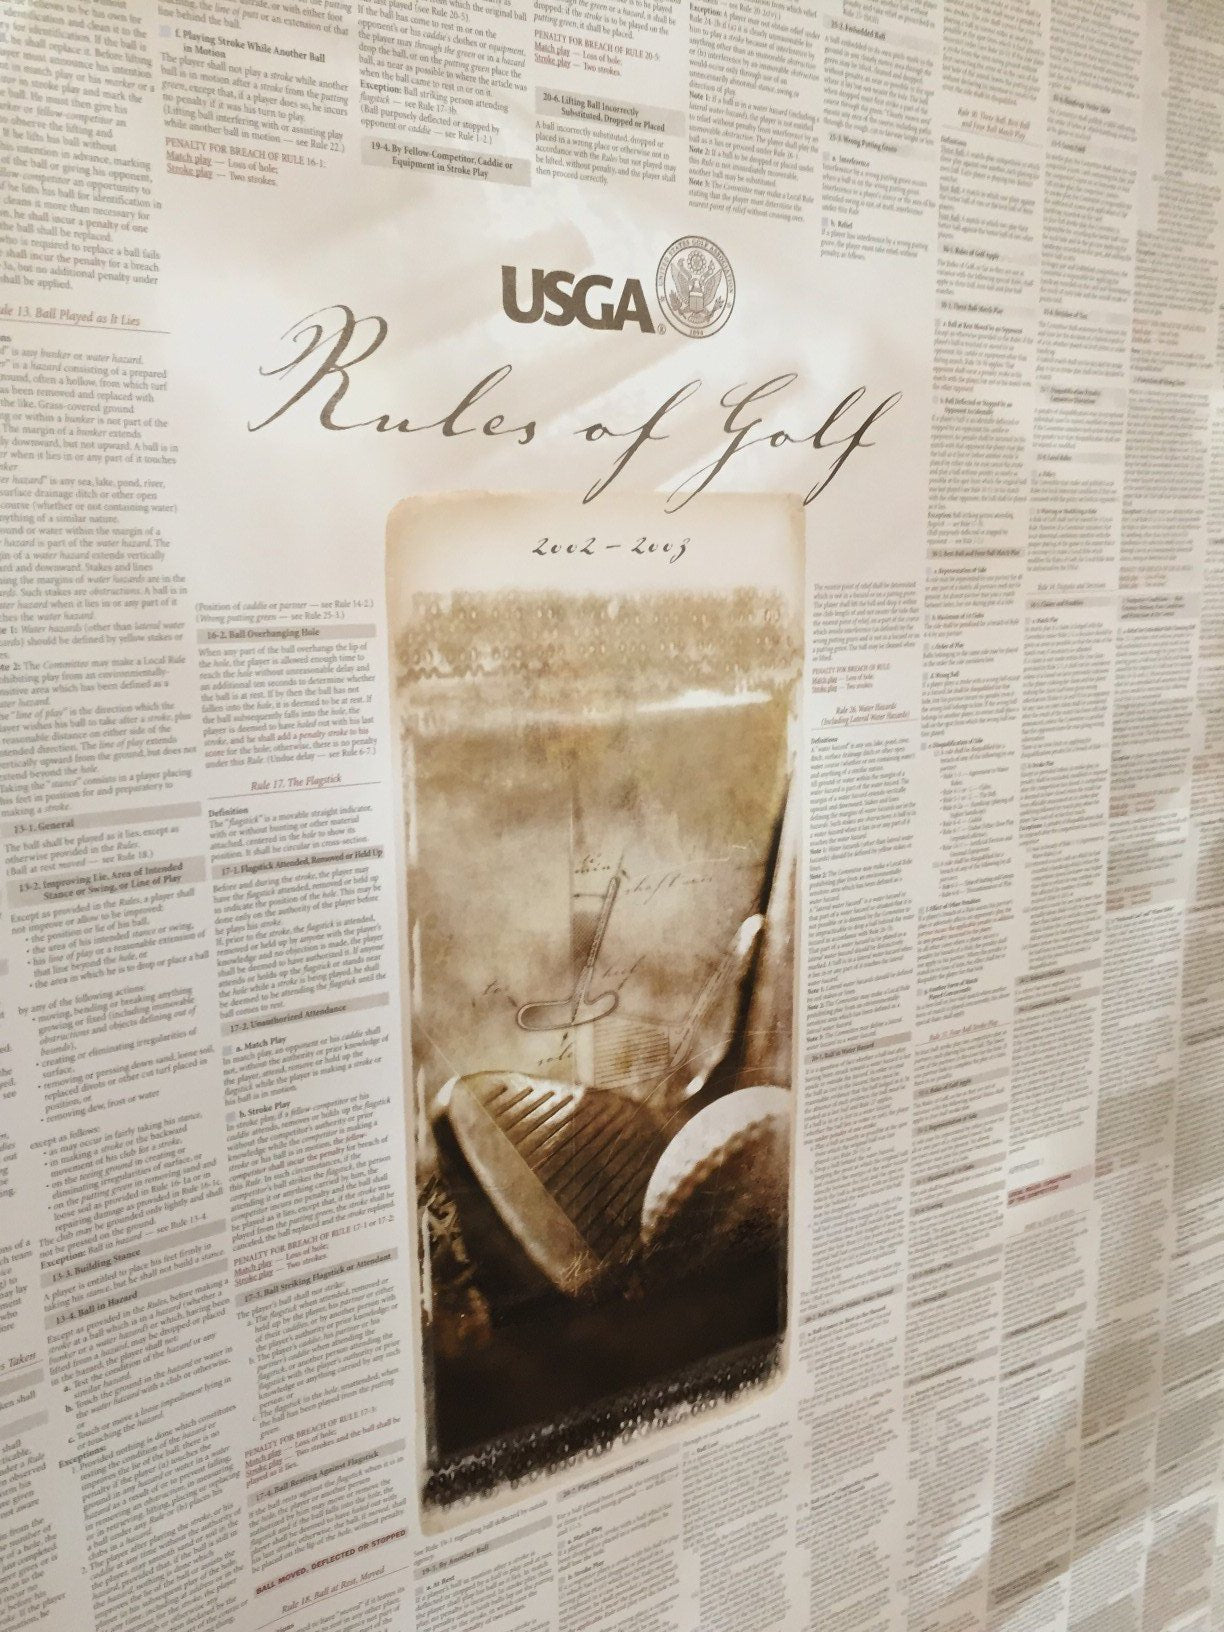 USGA Official Rules of Golf